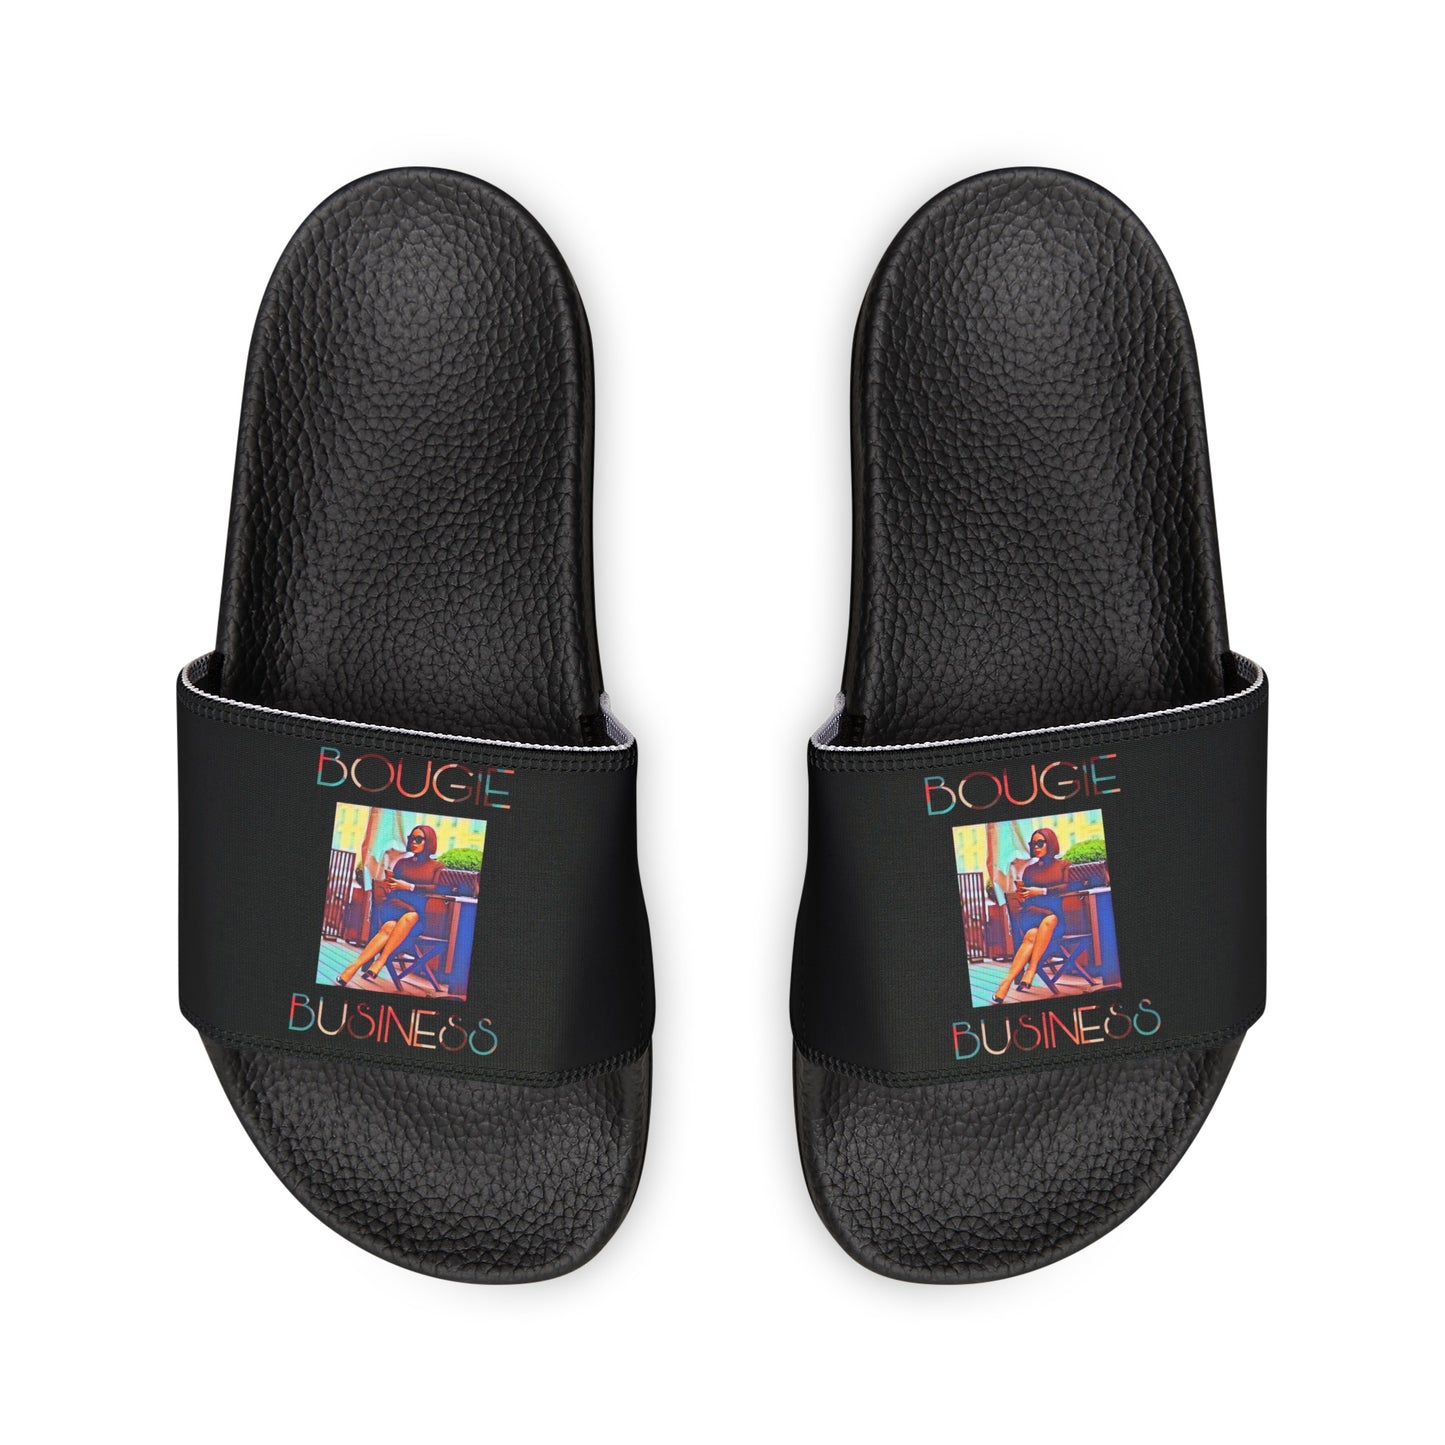 Bougie Business Slide Sandals